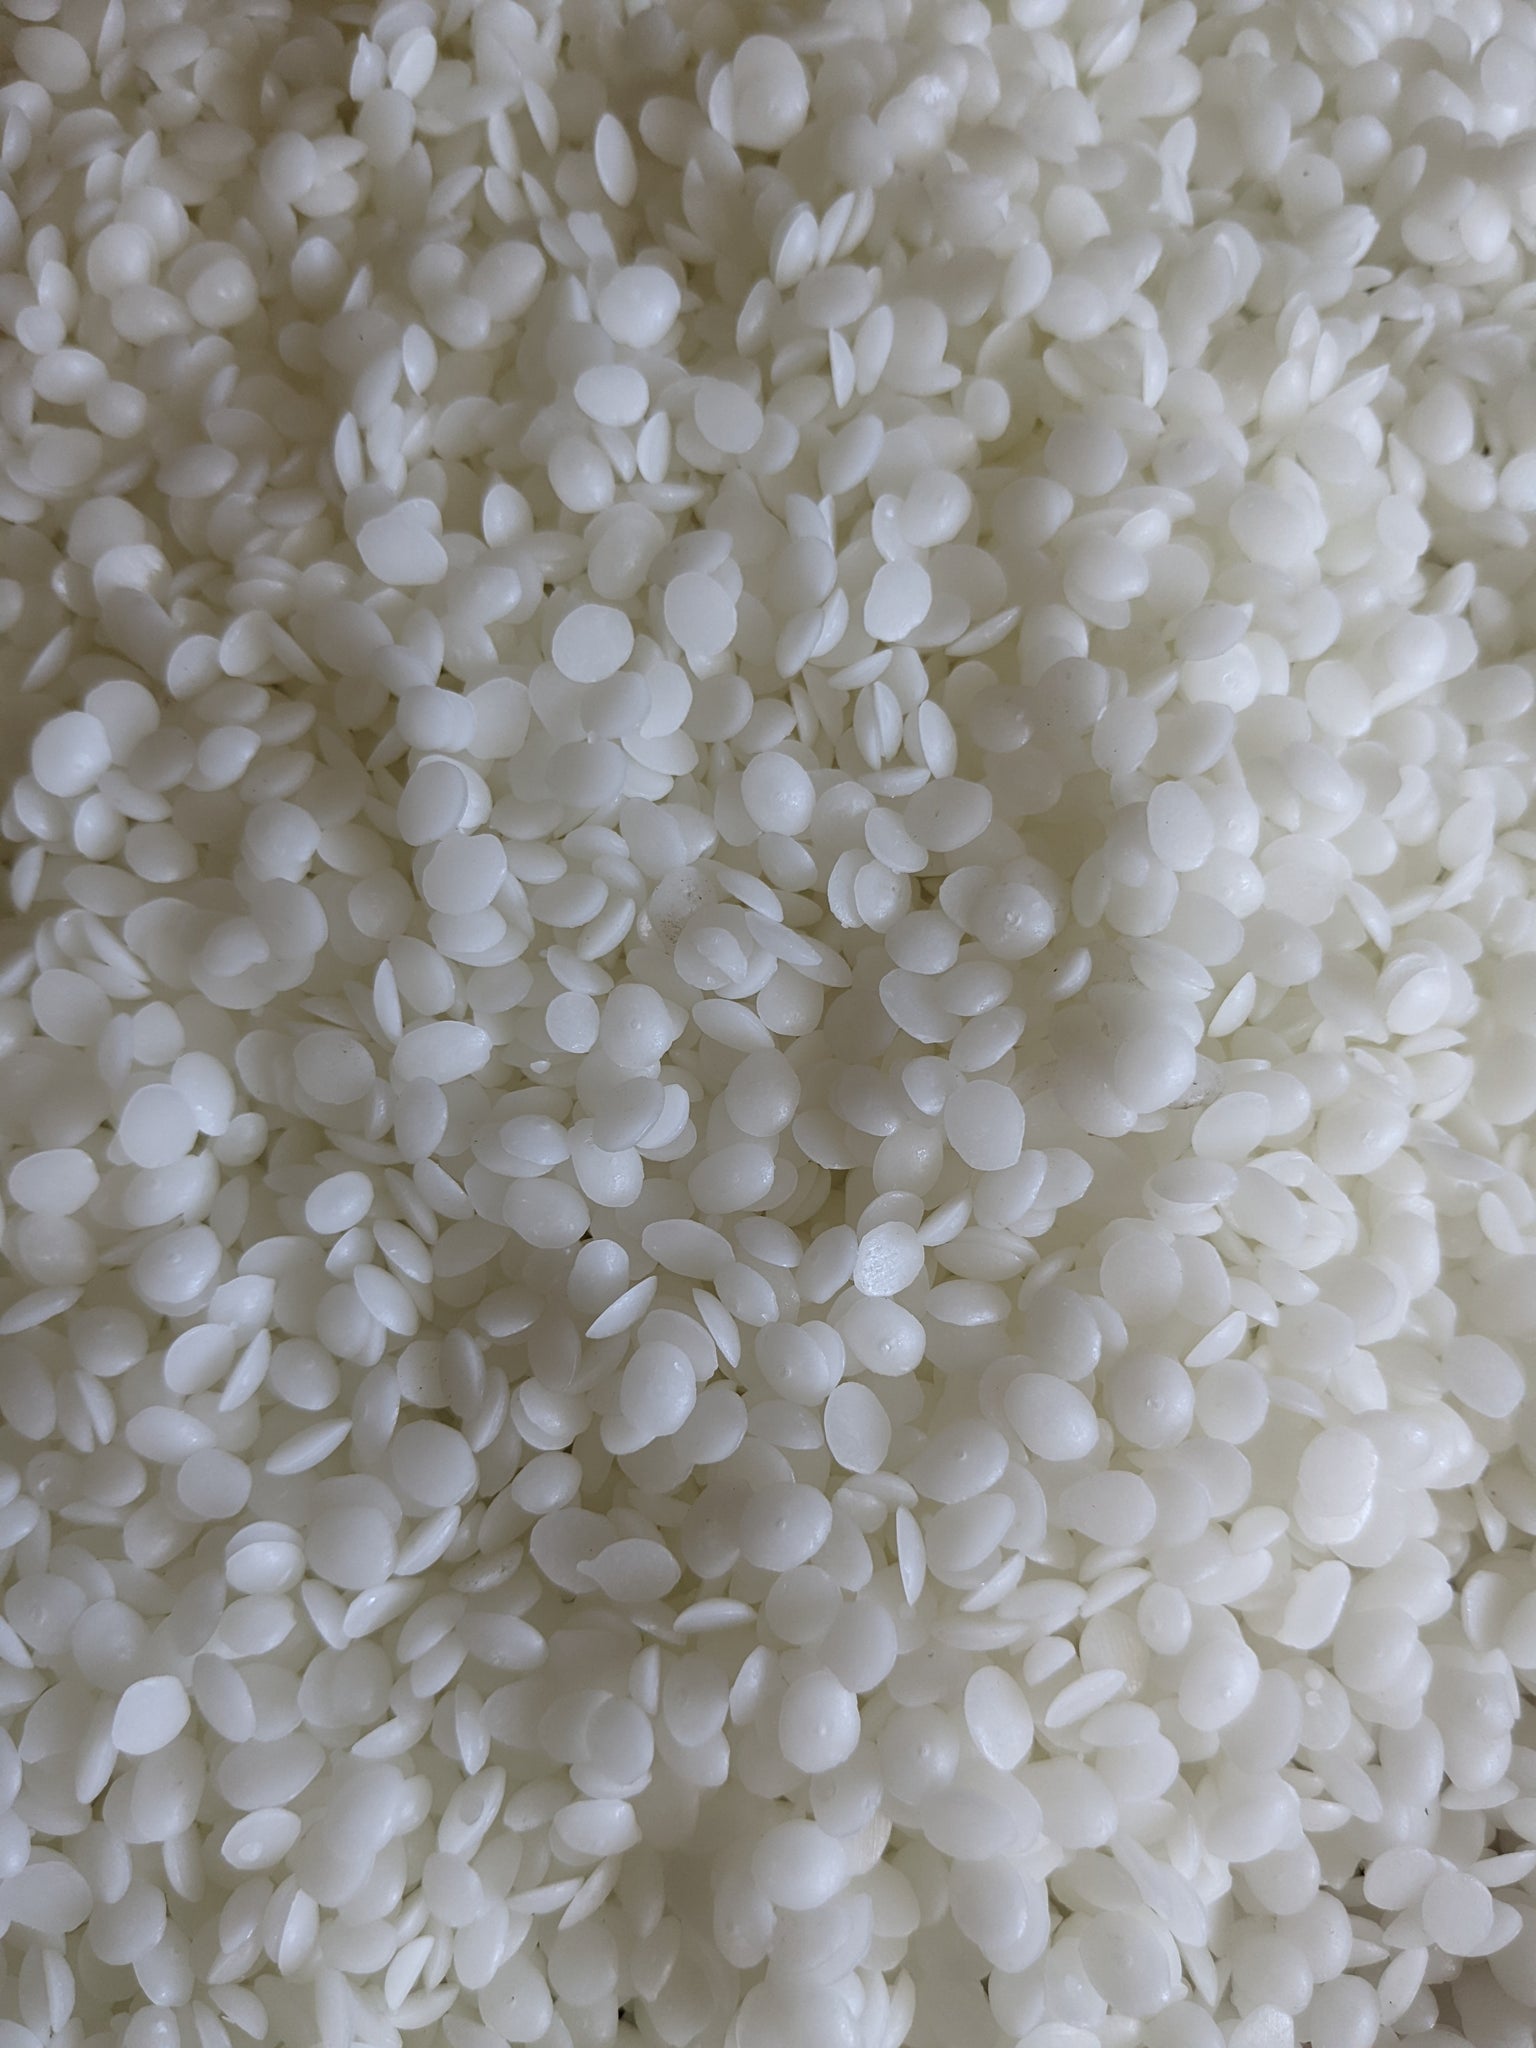 Microcrystalline wax beads pellets